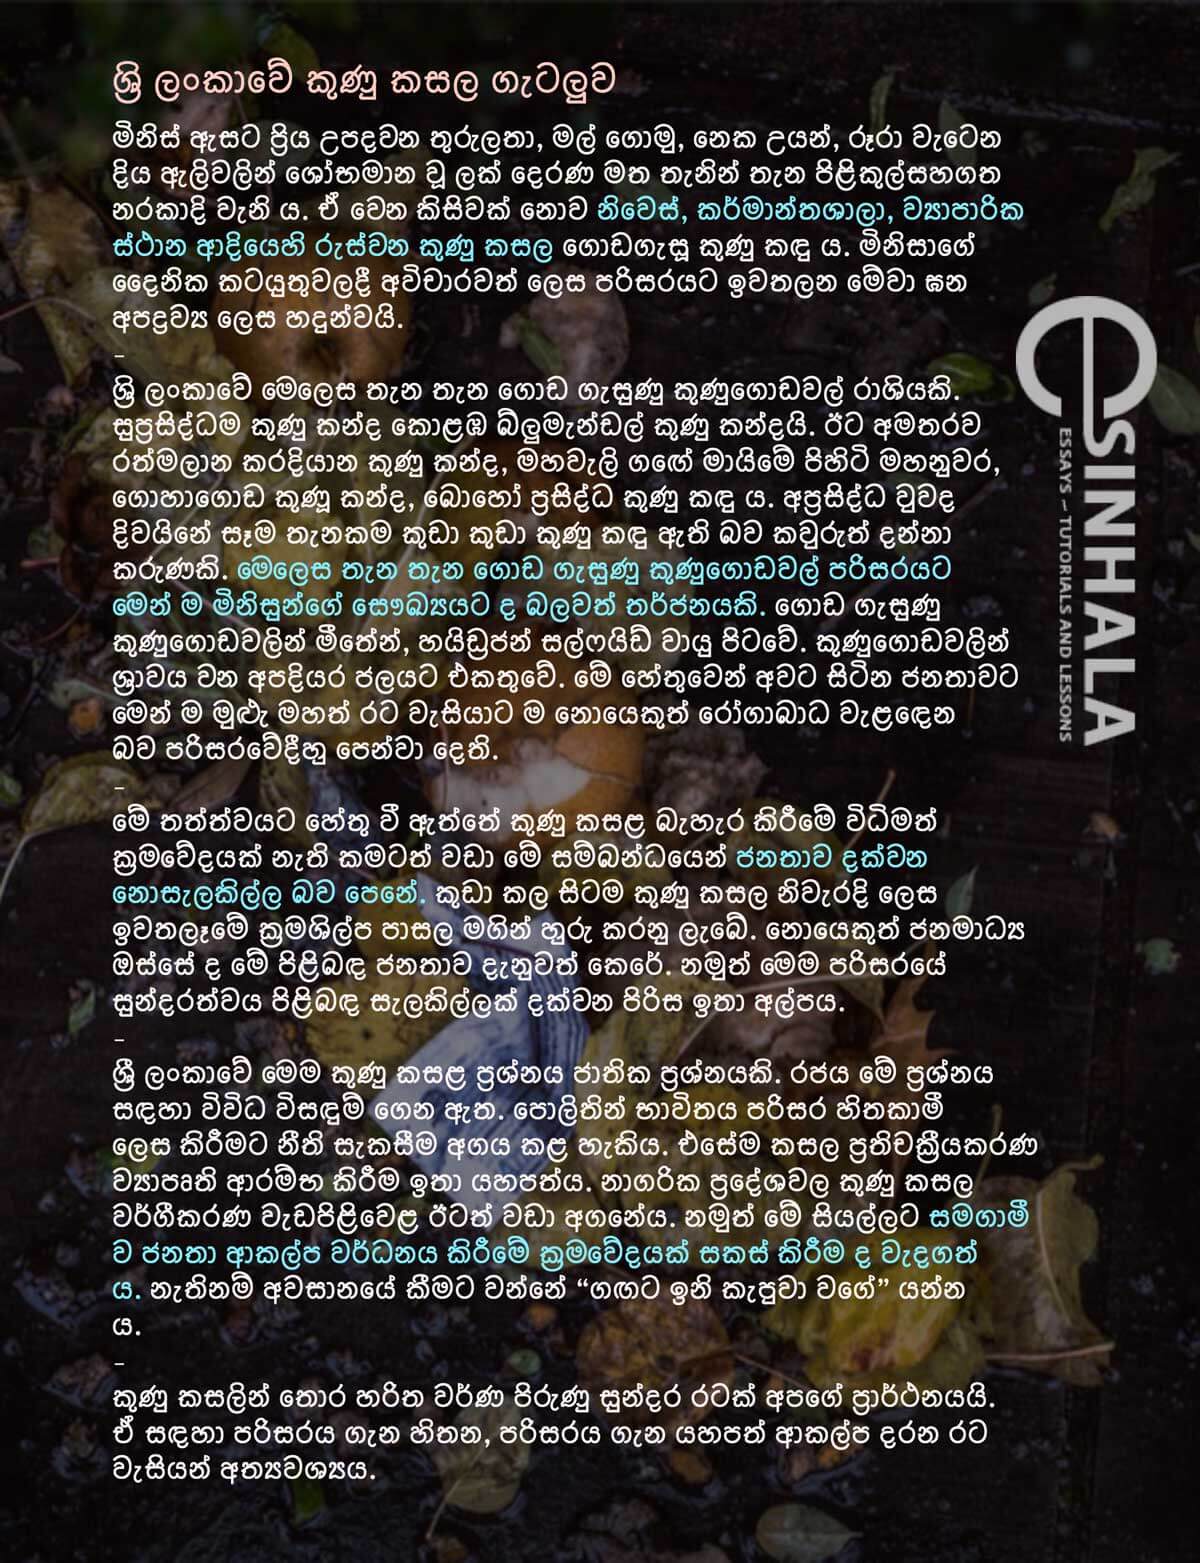 Sri Lanka garbage problem